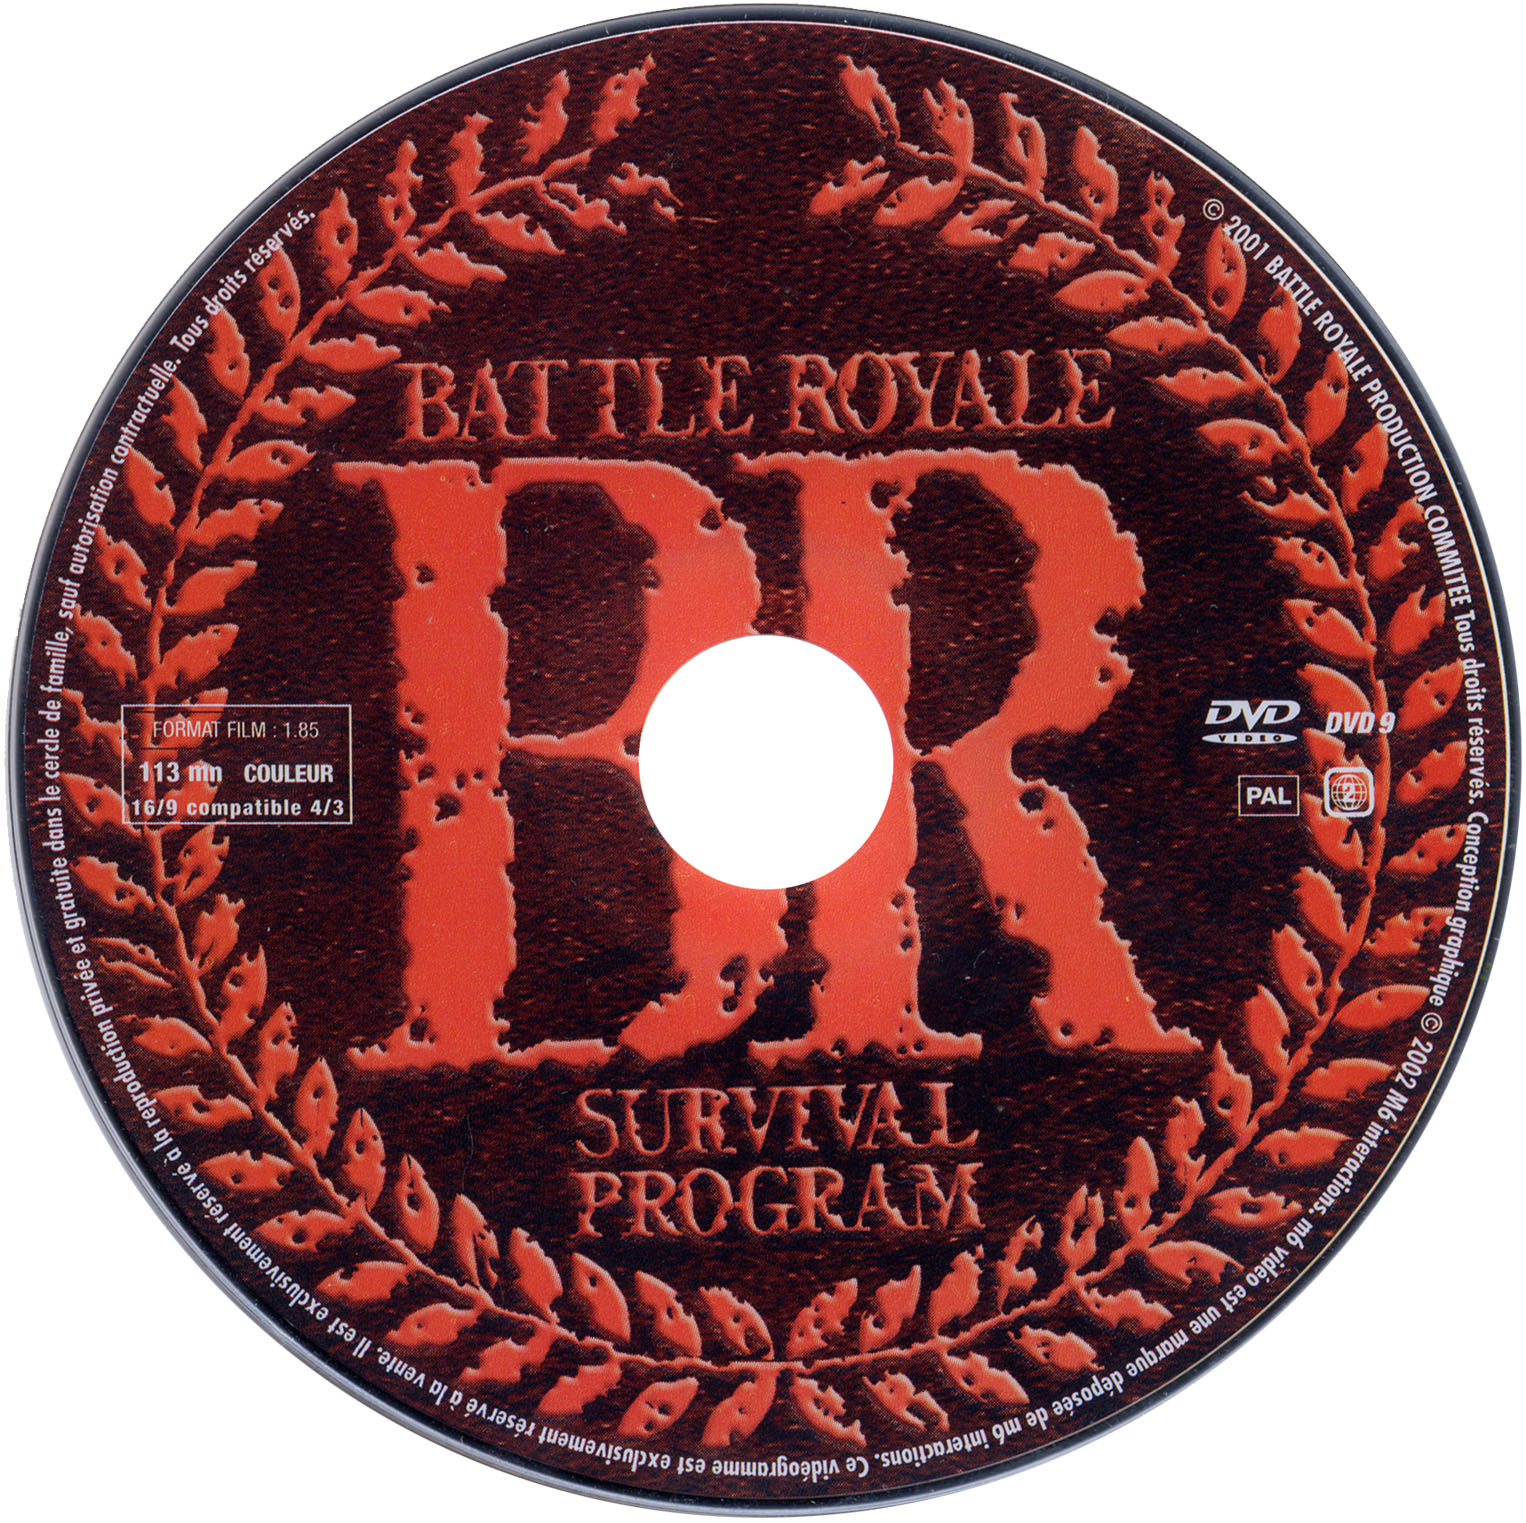 Battle royale (DVD)